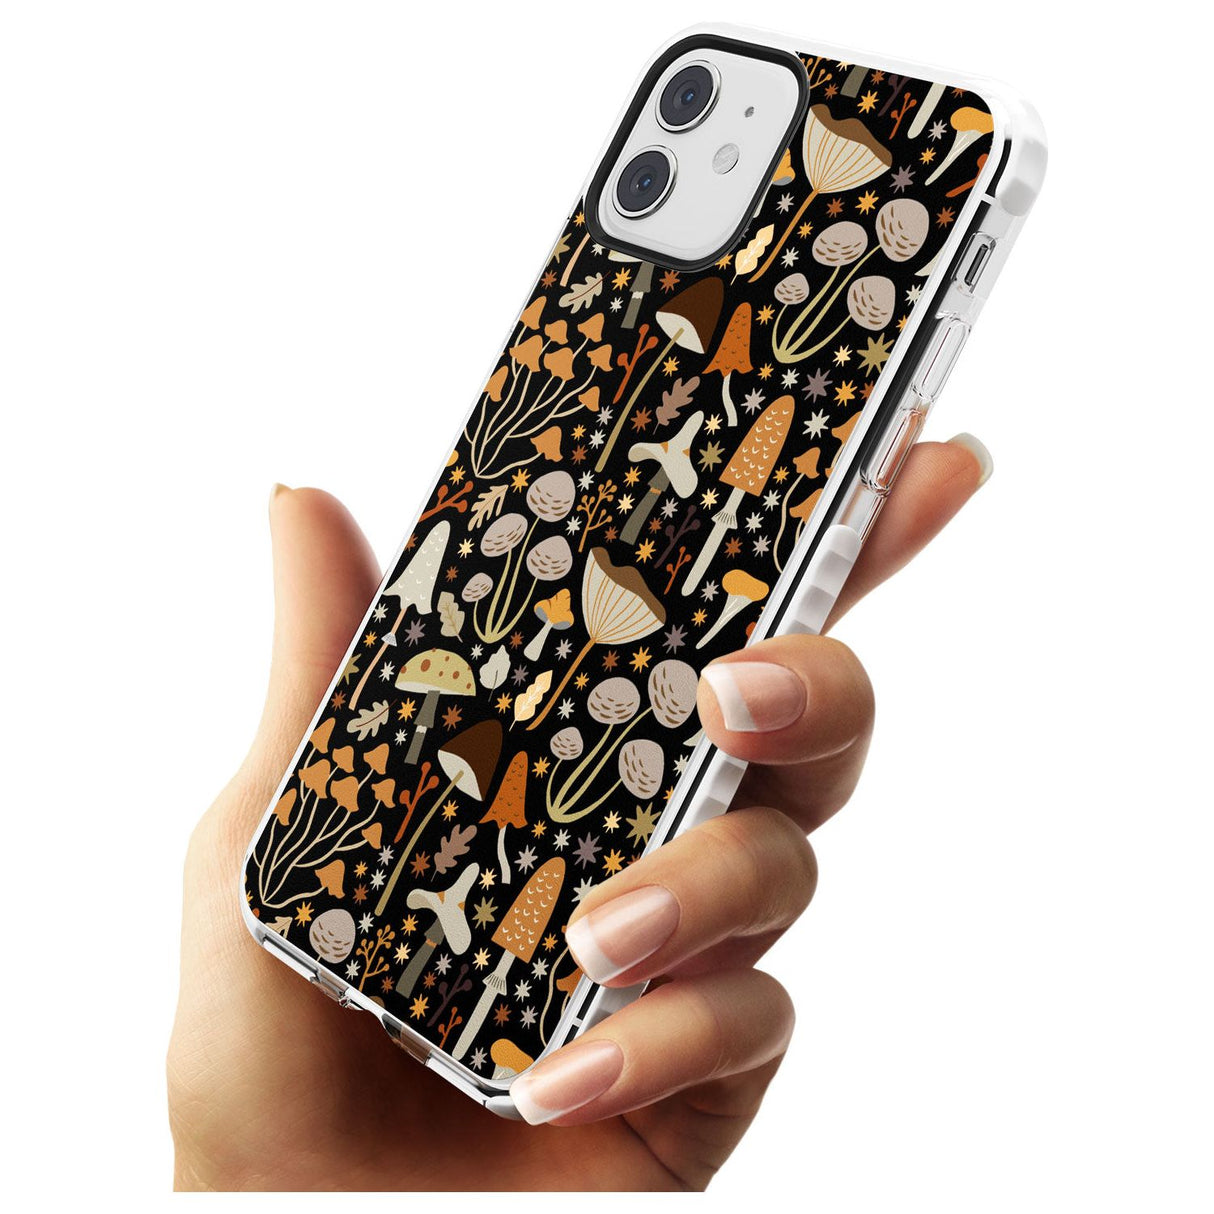 Sentimental Mushrooms Pattern Impact Phone Case for iPhone 11